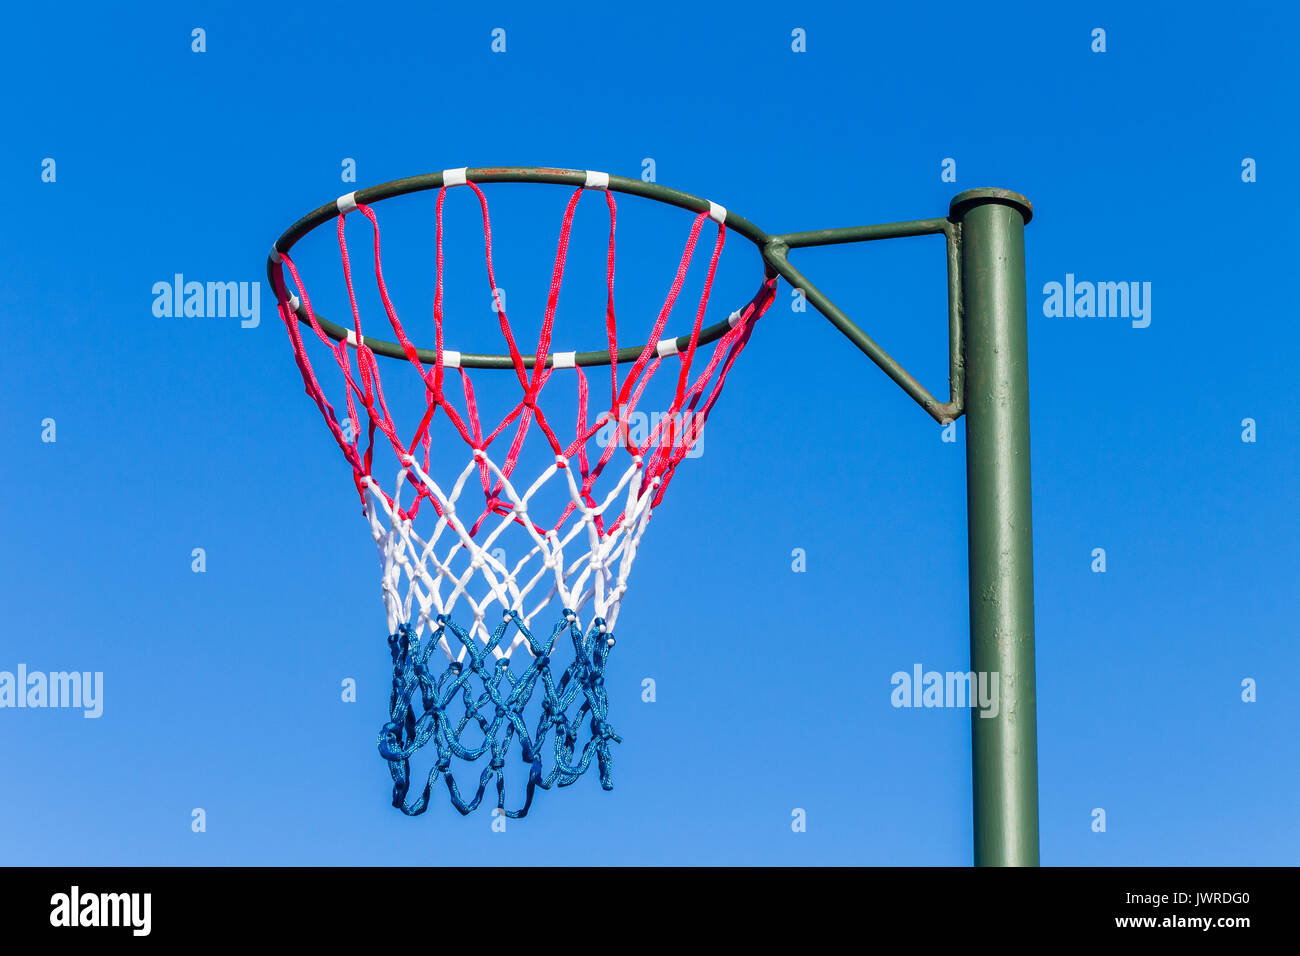 Netball net hoop pole outdoors court venue. Stock Photo